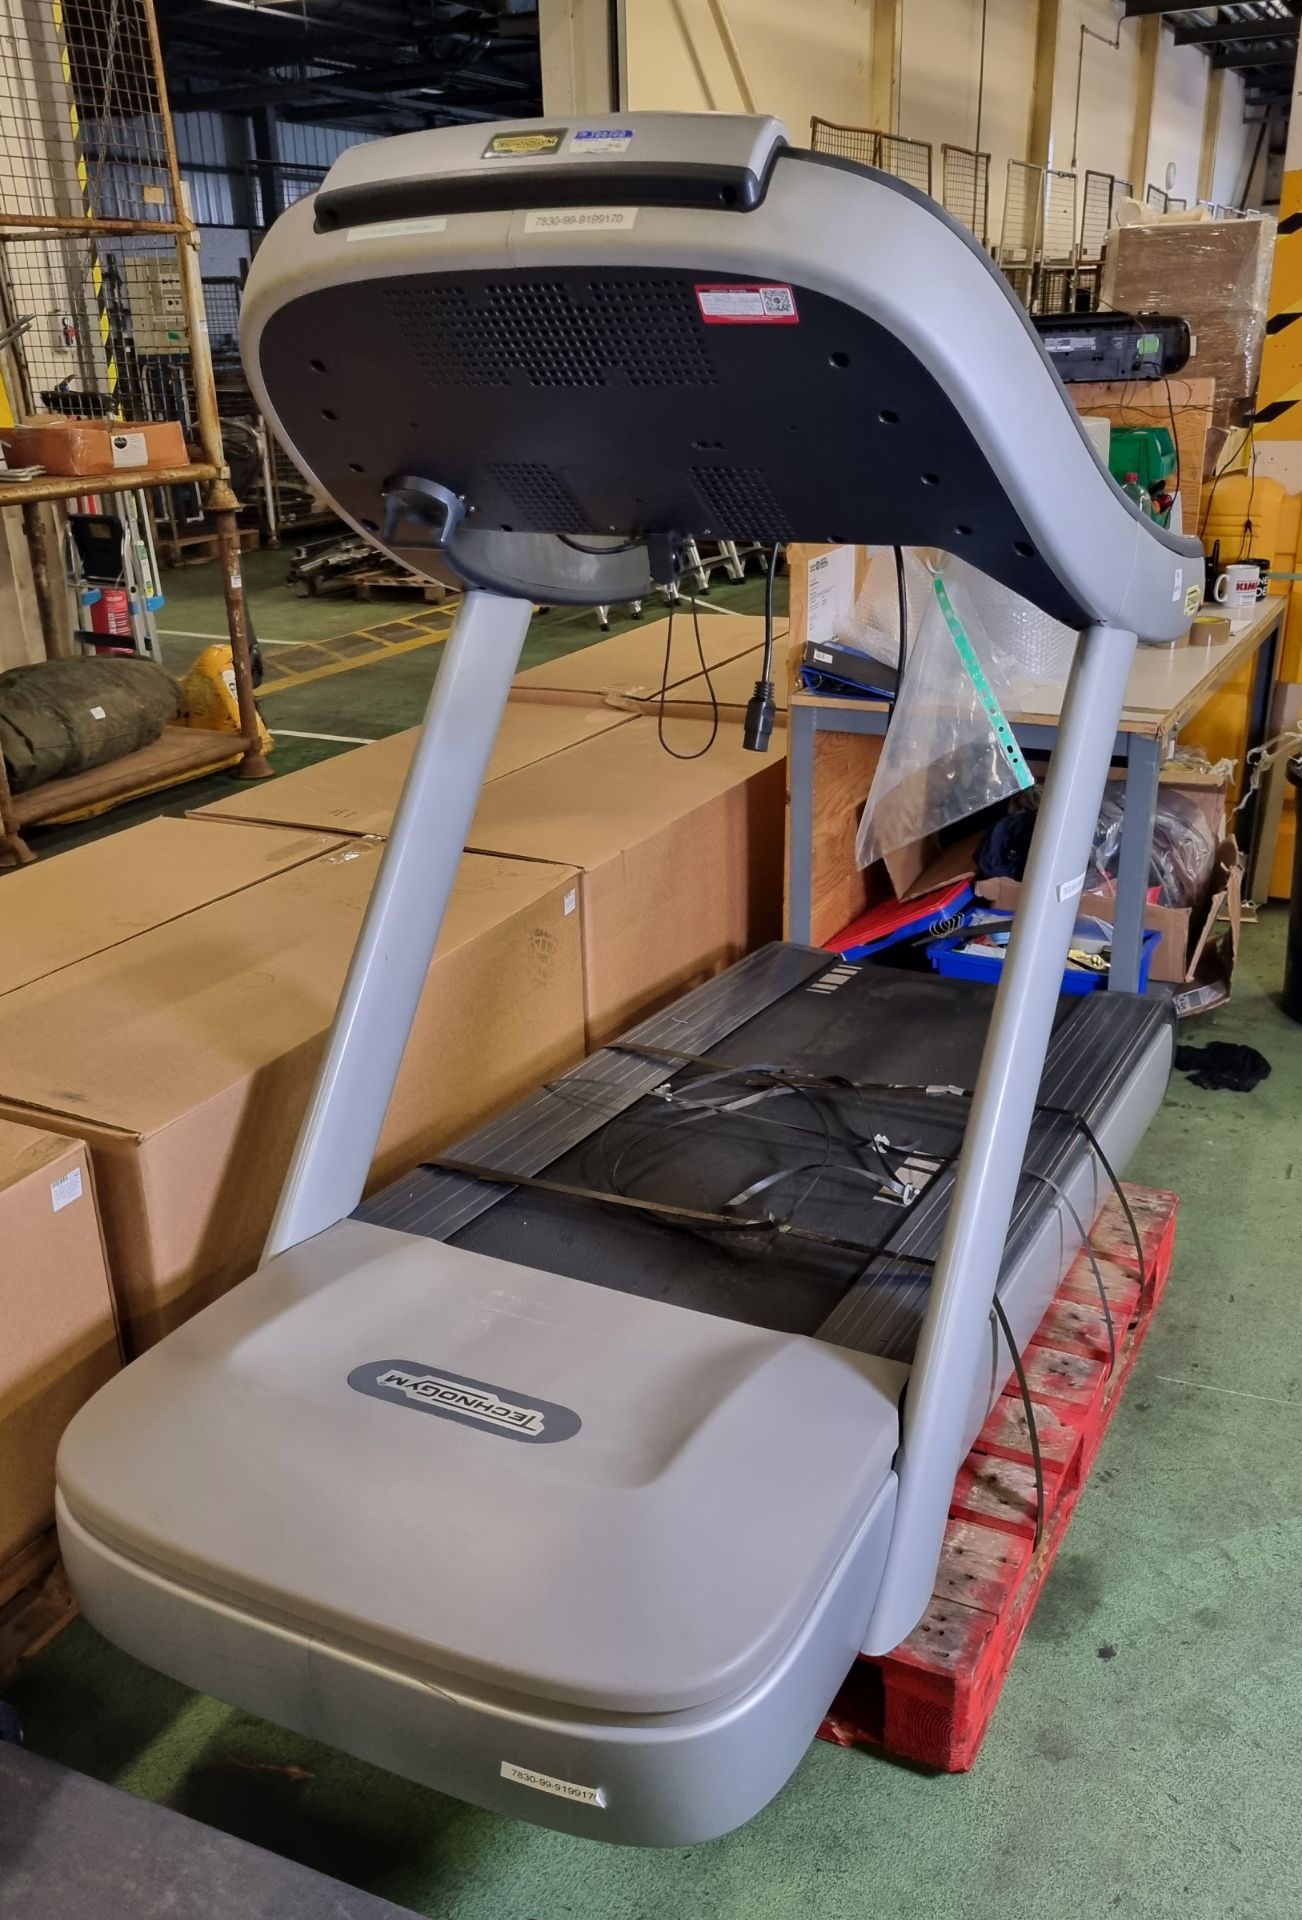 Technogym treadmill - 250V - L 2200 x W 950 x H 1550mm - Image 5 of 5